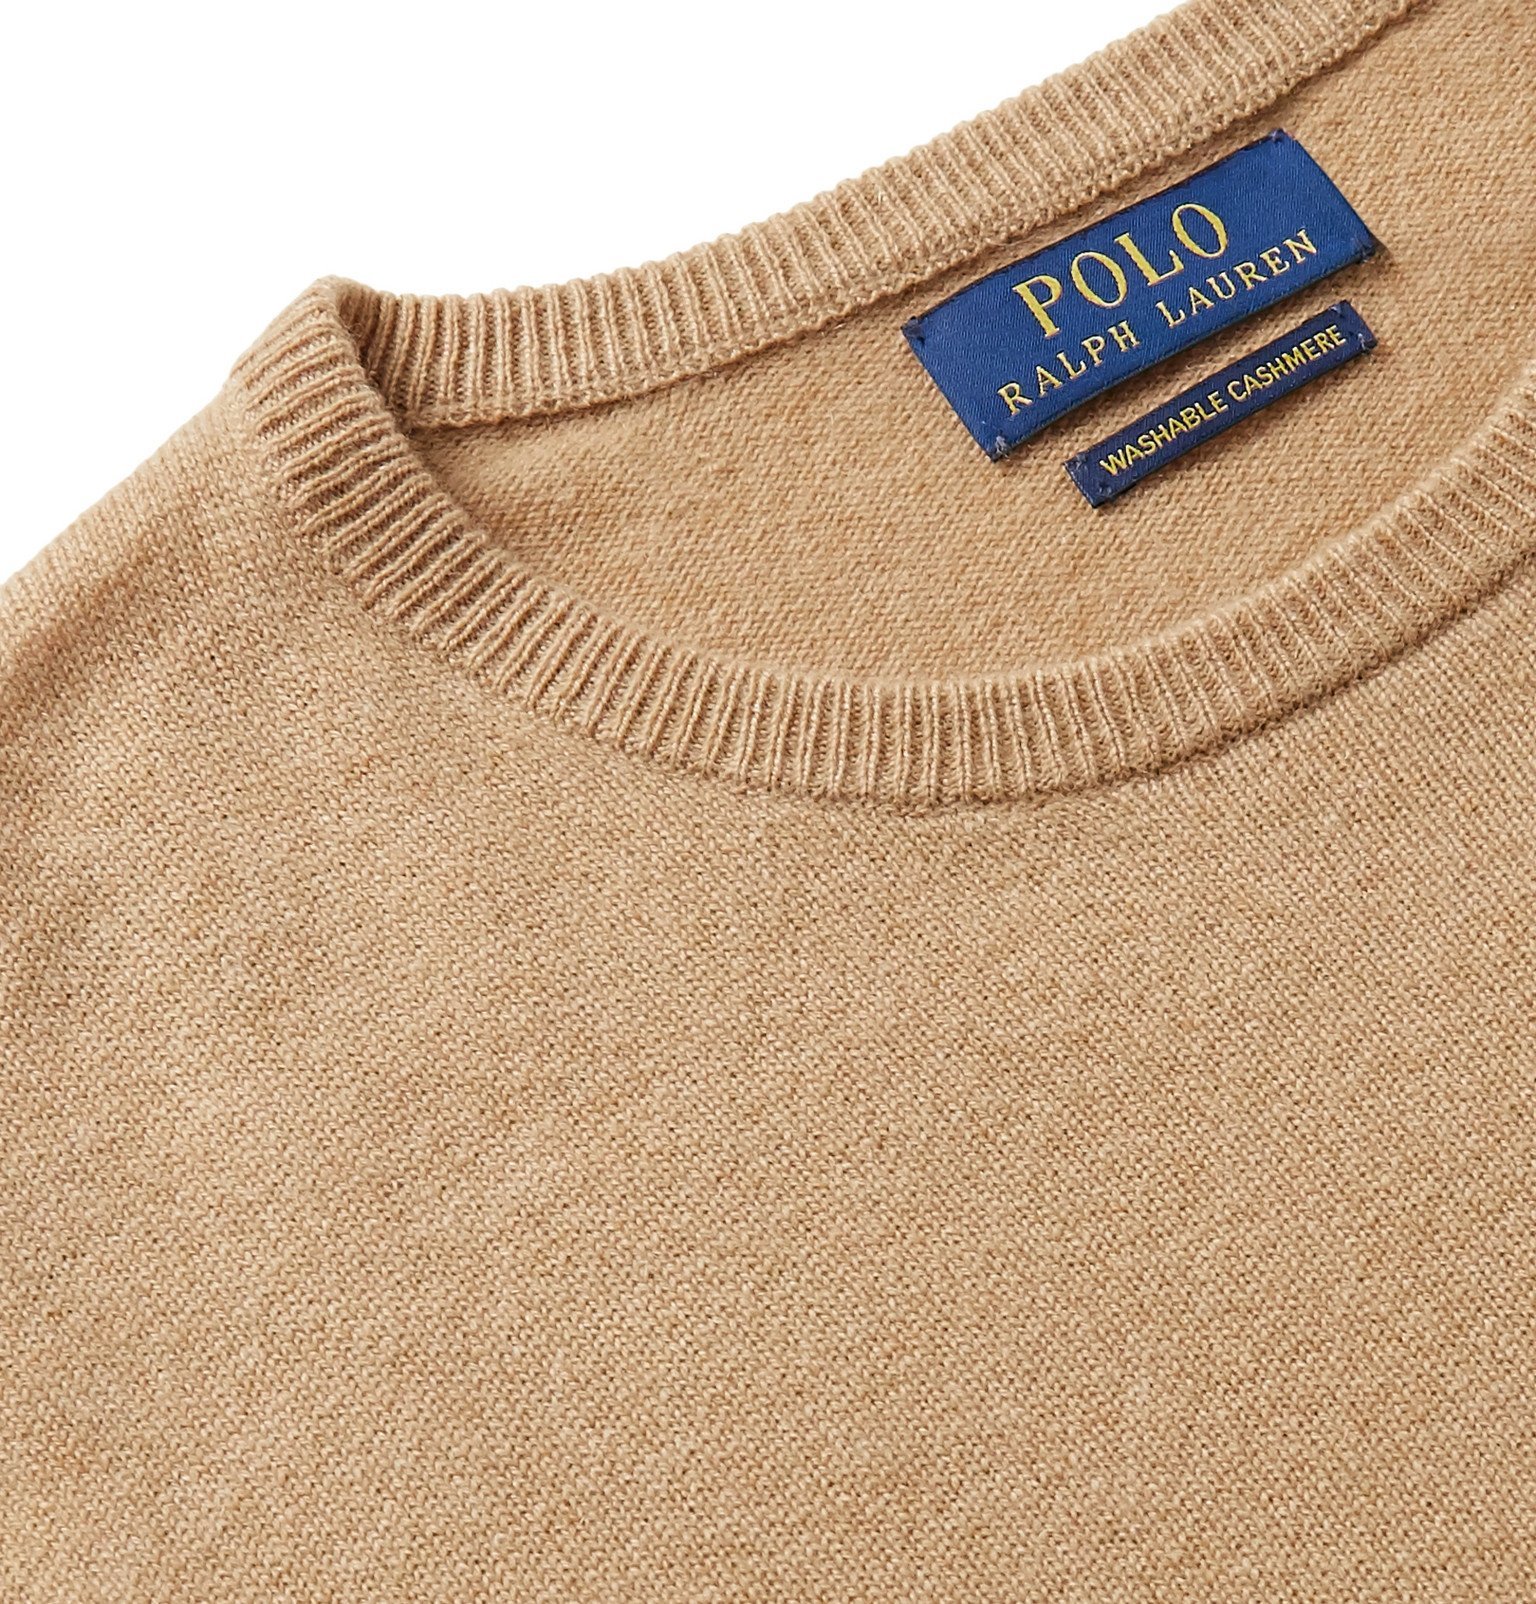 Polo Ralph Lauren - Mélange Cashmere Sweater - Brown Polo Ralph Lauren